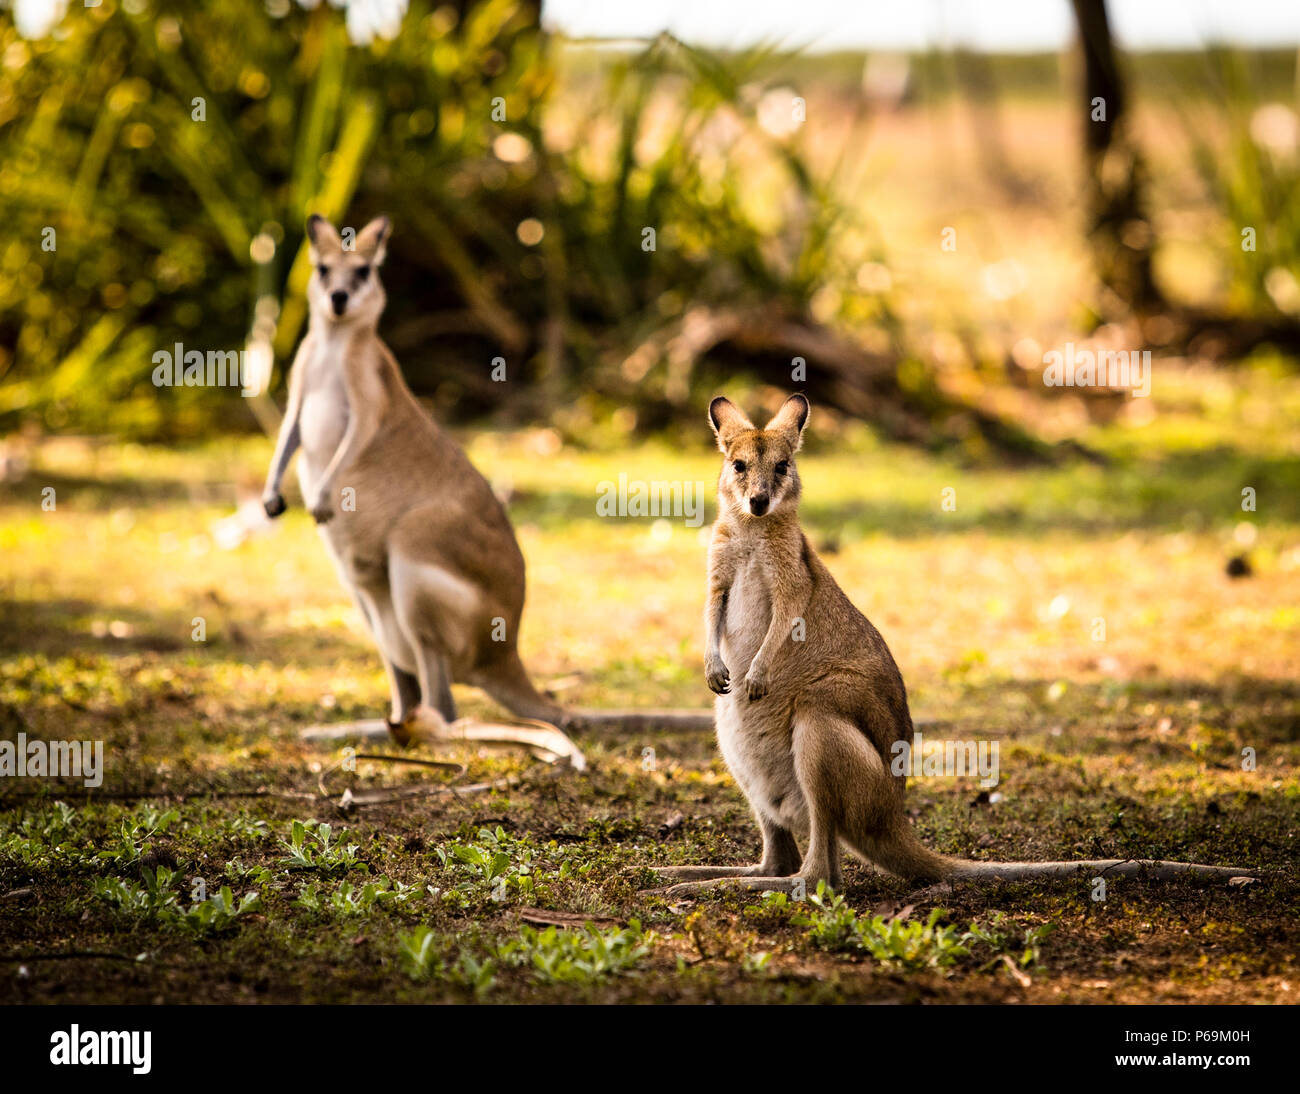 Kangaroo of Northern Australia Stock Photo